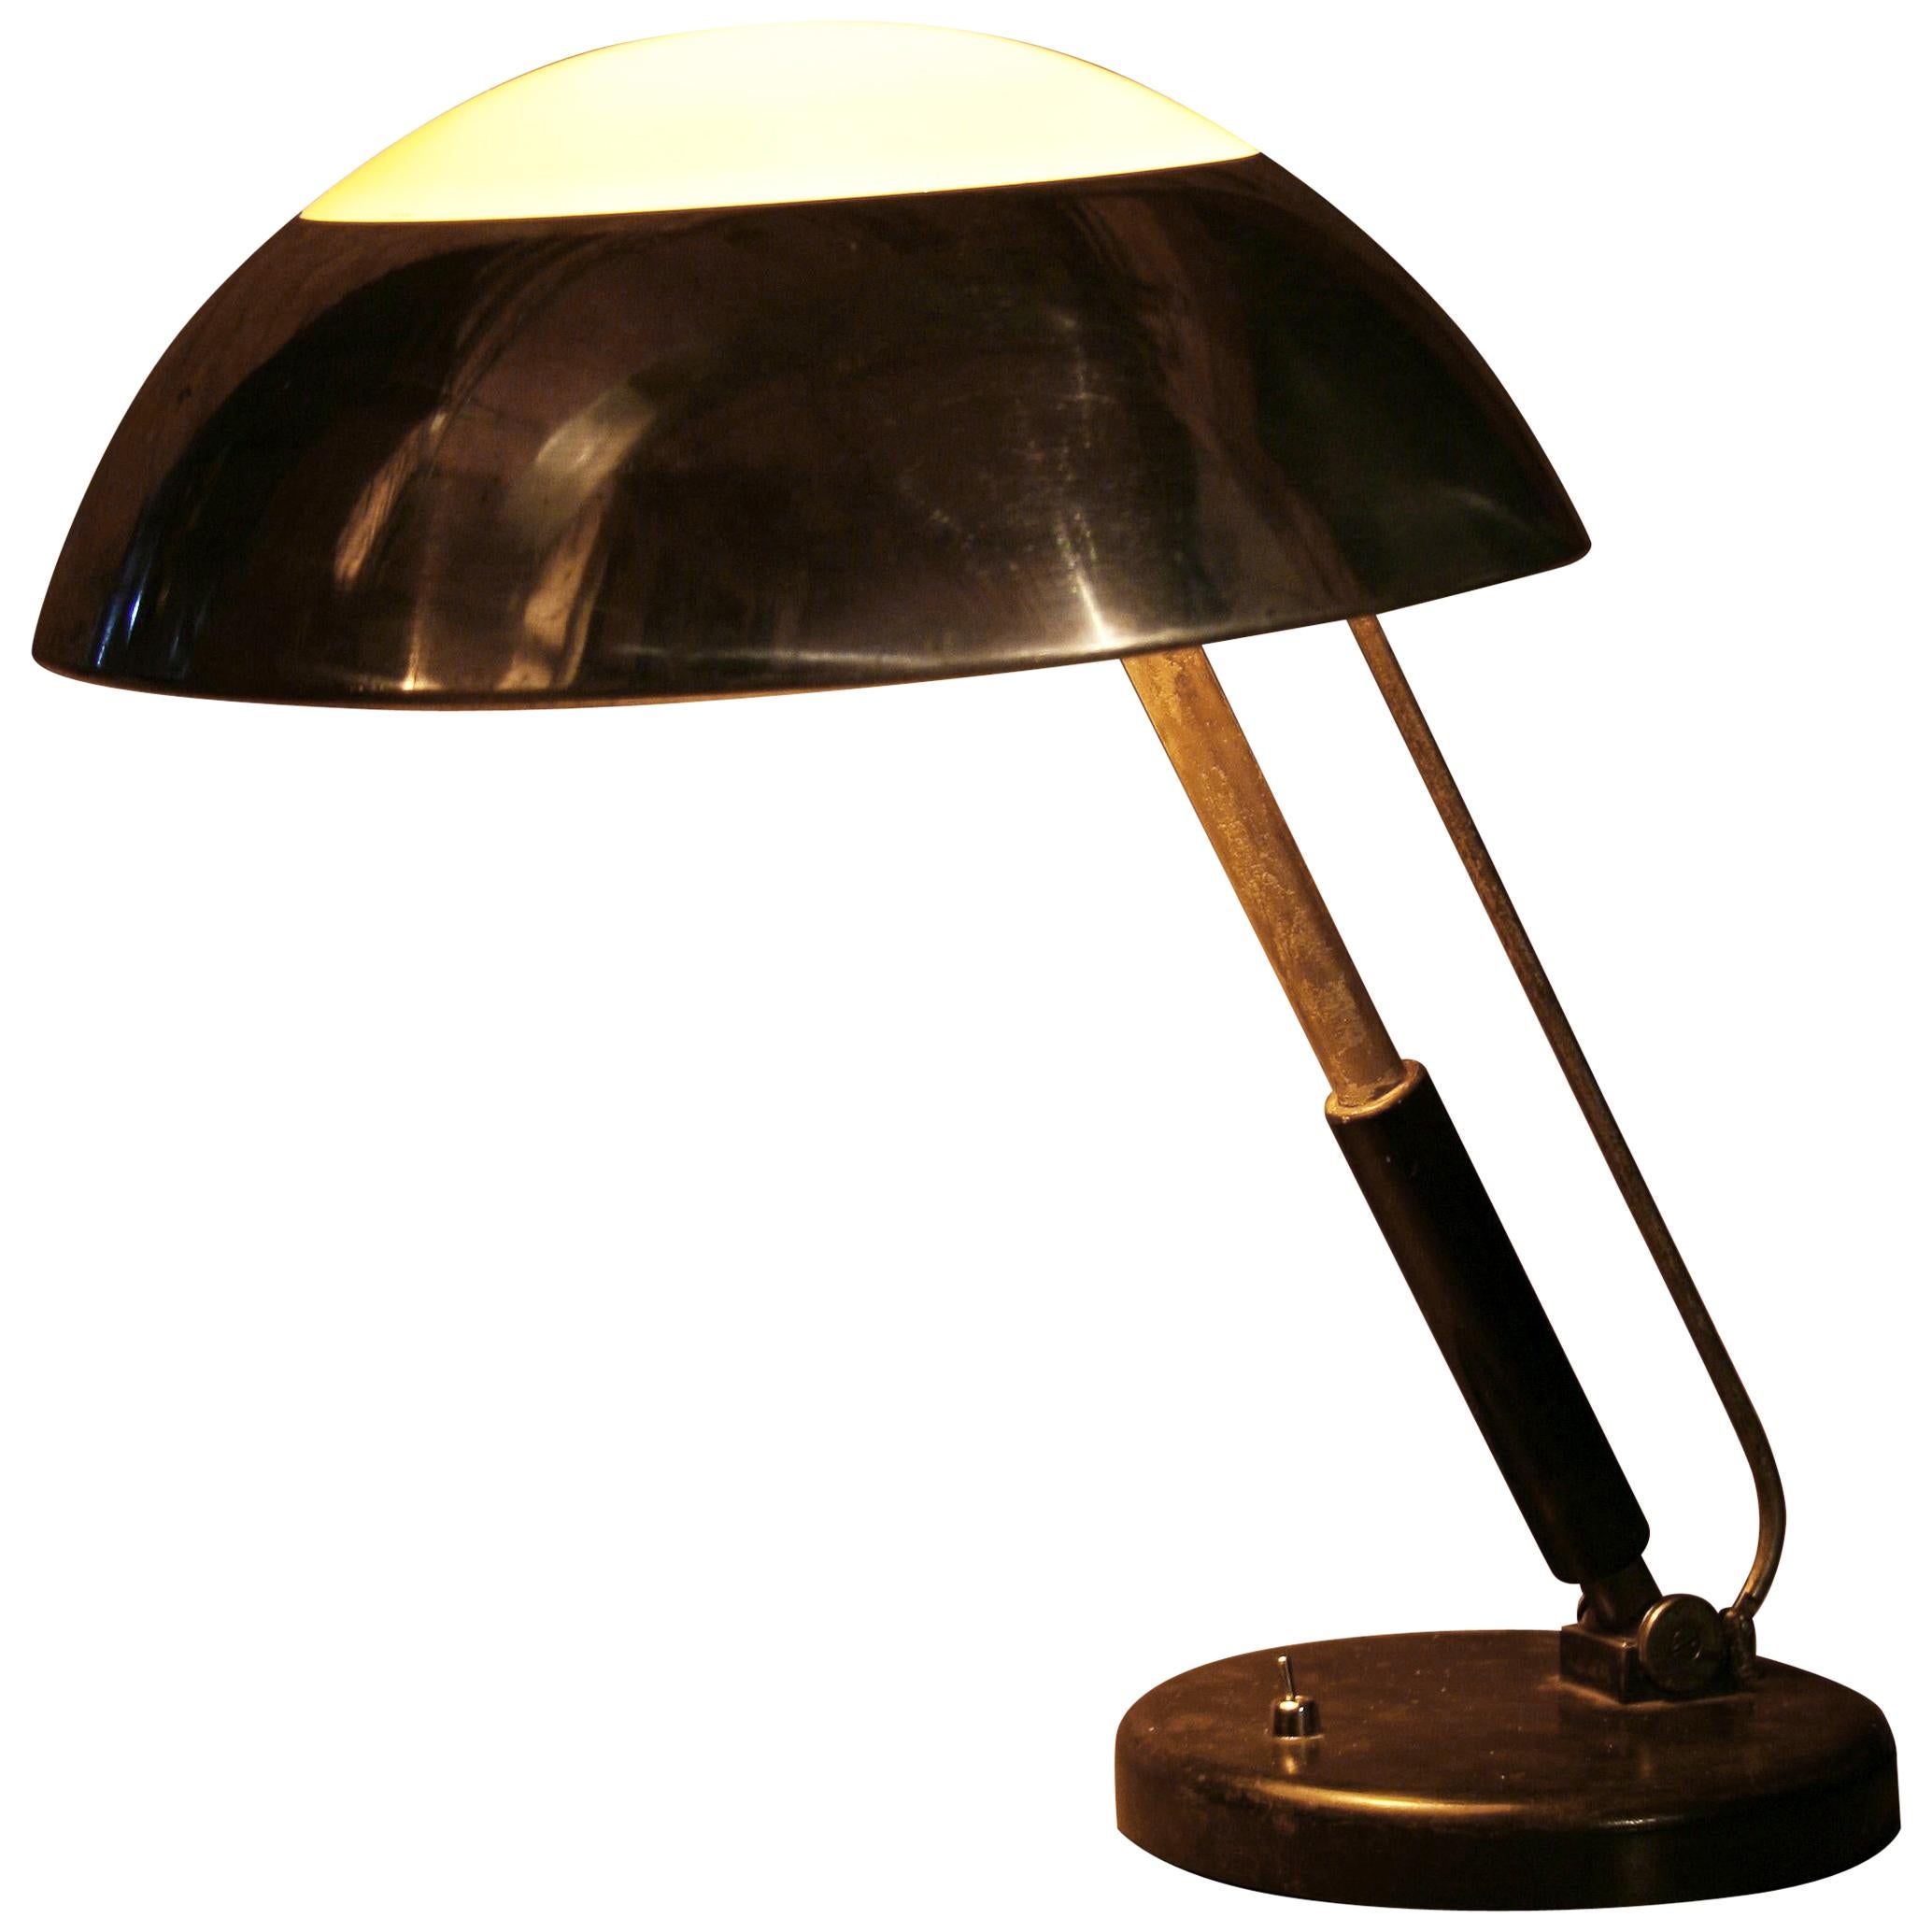 1930s Art Deco Desk Lamp Designed by Karl Trabert